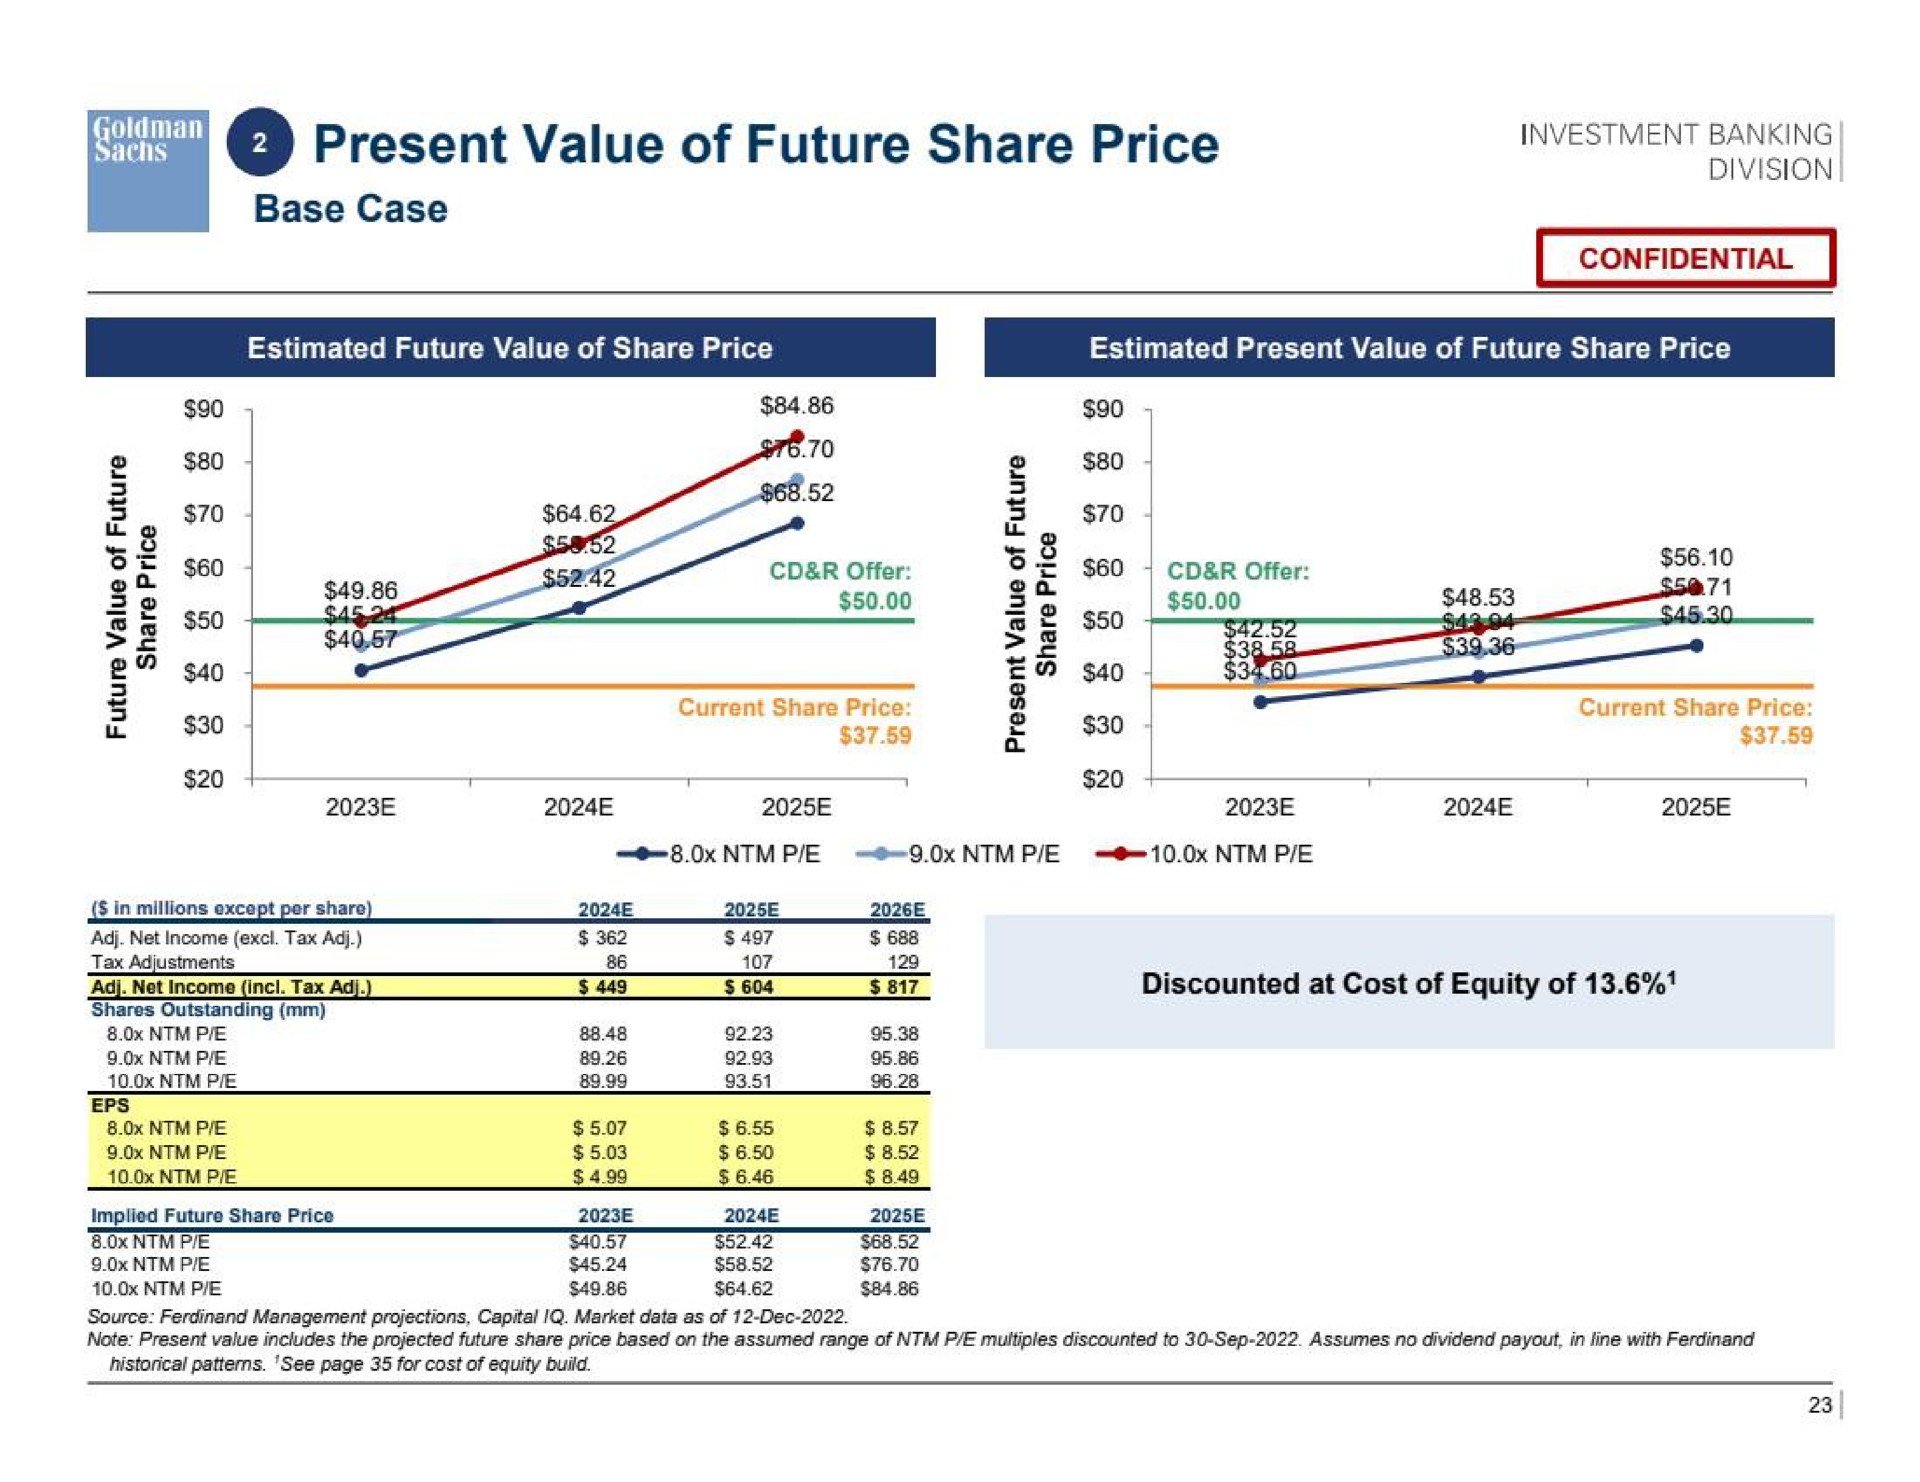 present value of future share price sen | Goldman Sachs